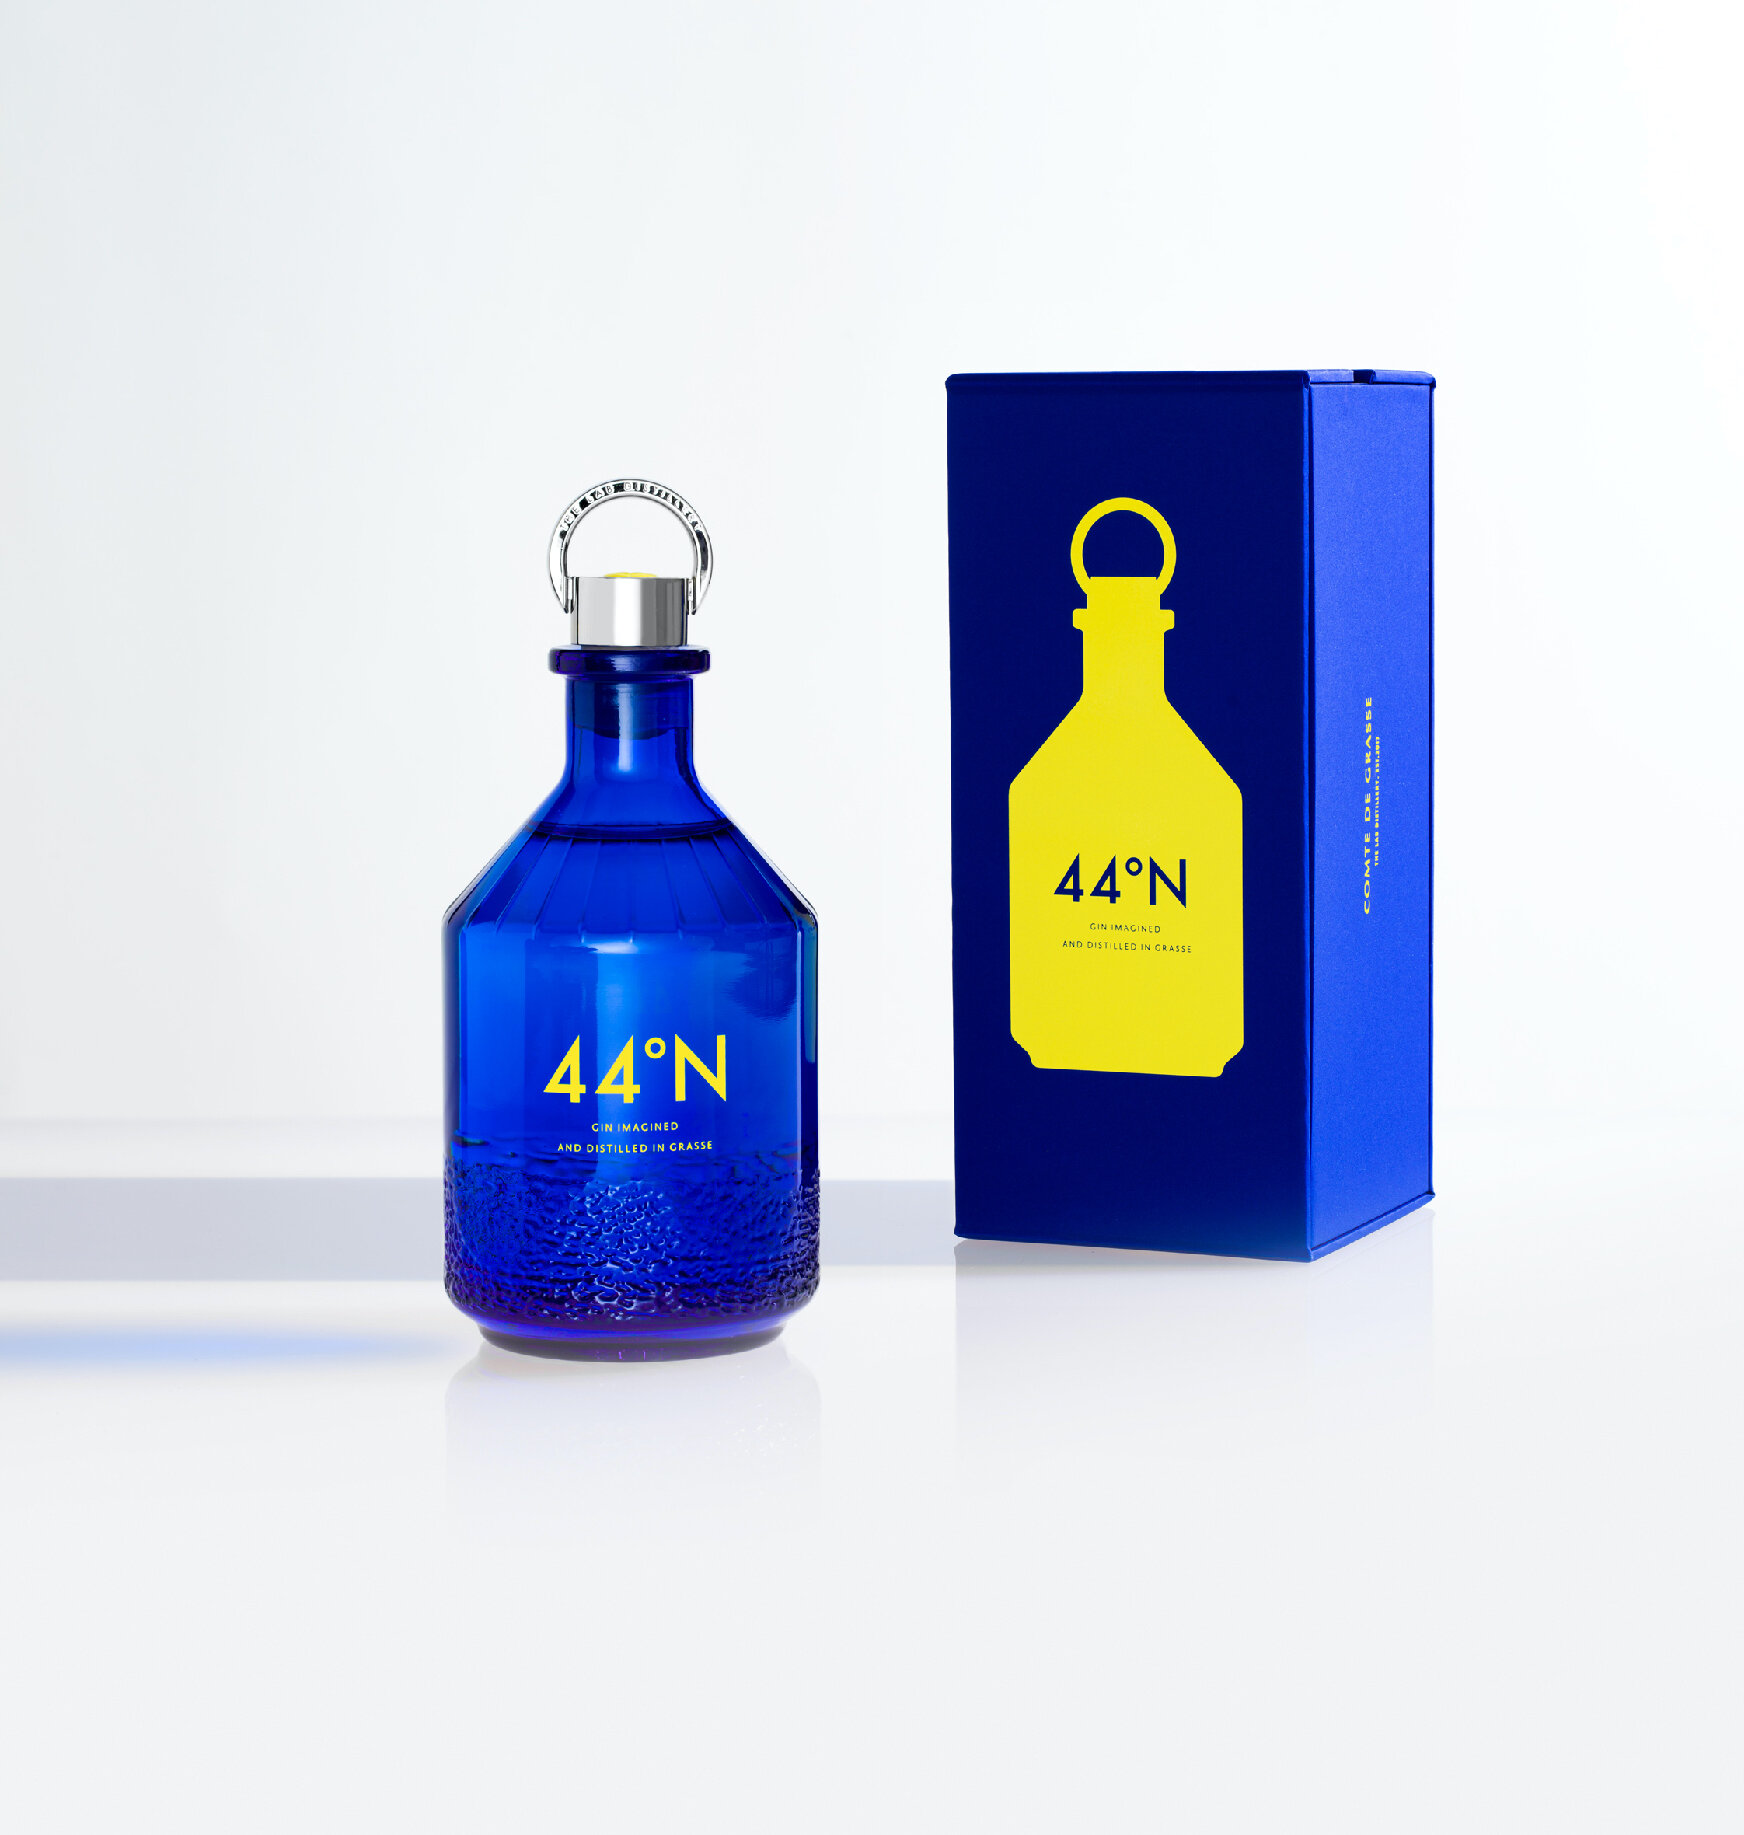 44N Bottle and Box Press.jpg